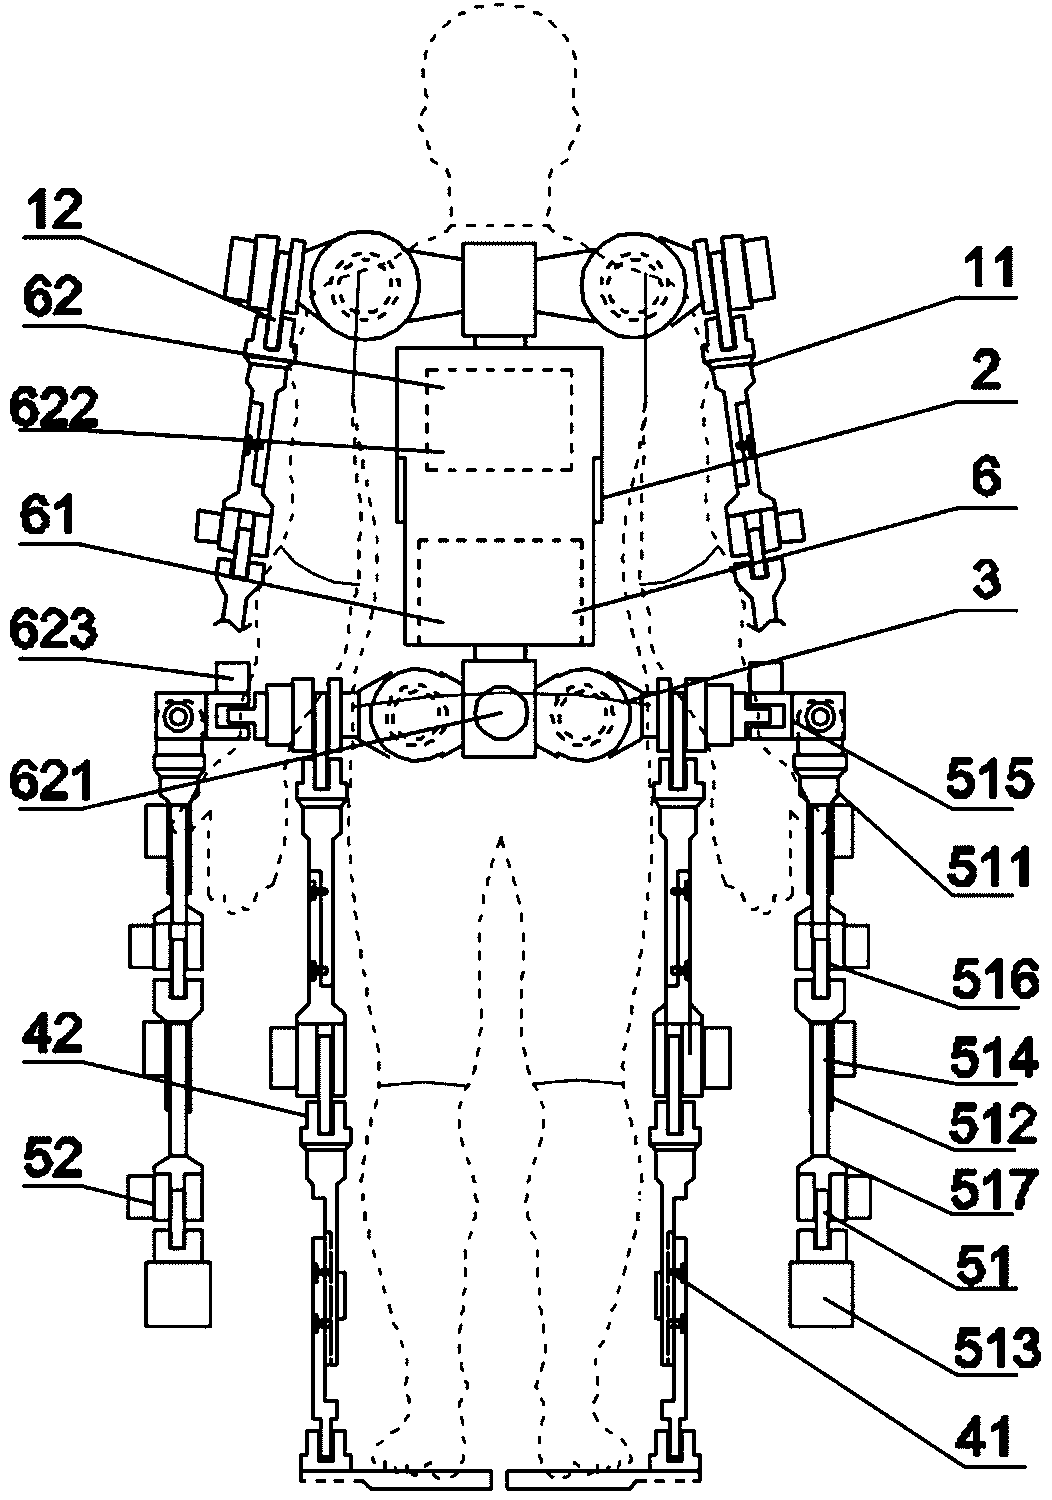 Multi-functional auxiliary arm self-balancing mechanical exoskeleton